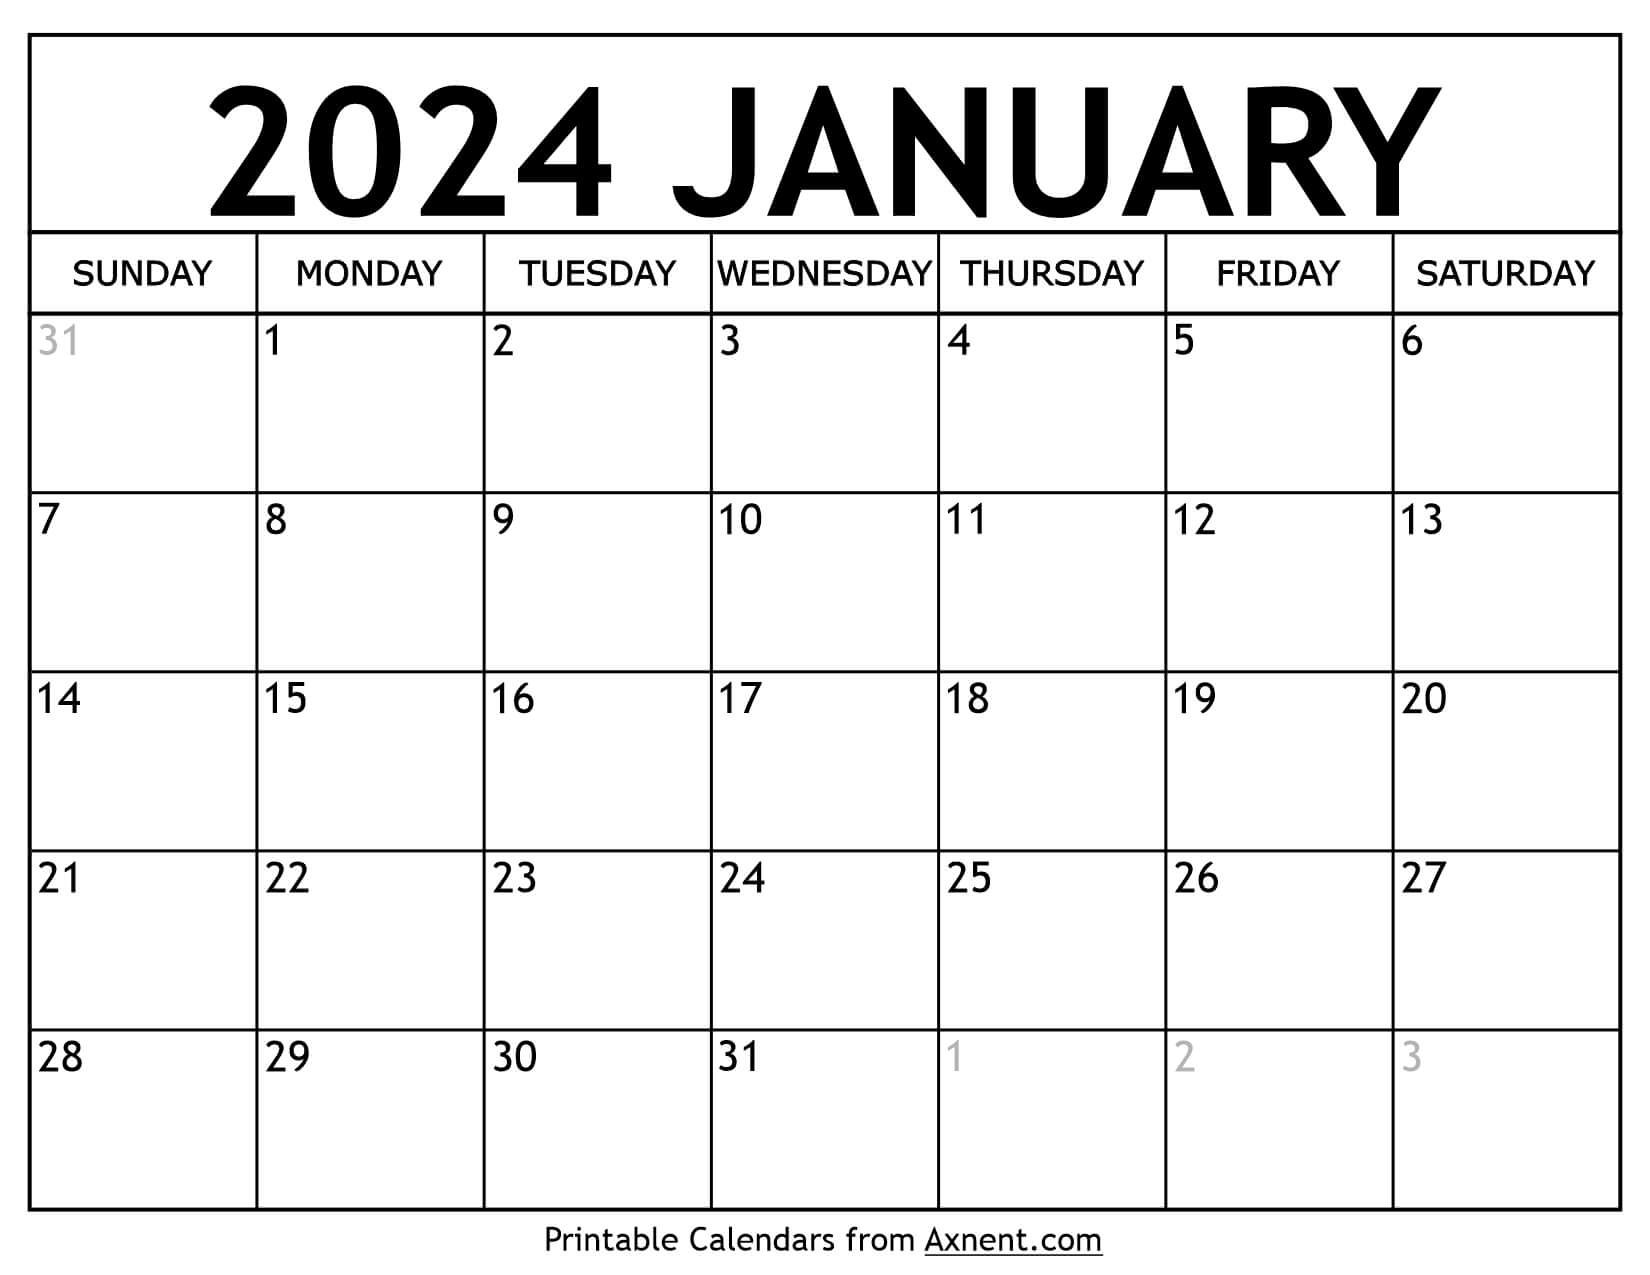 Printable January 2024 Calendar Template - Print Now for Free January Printable Calendar 2024